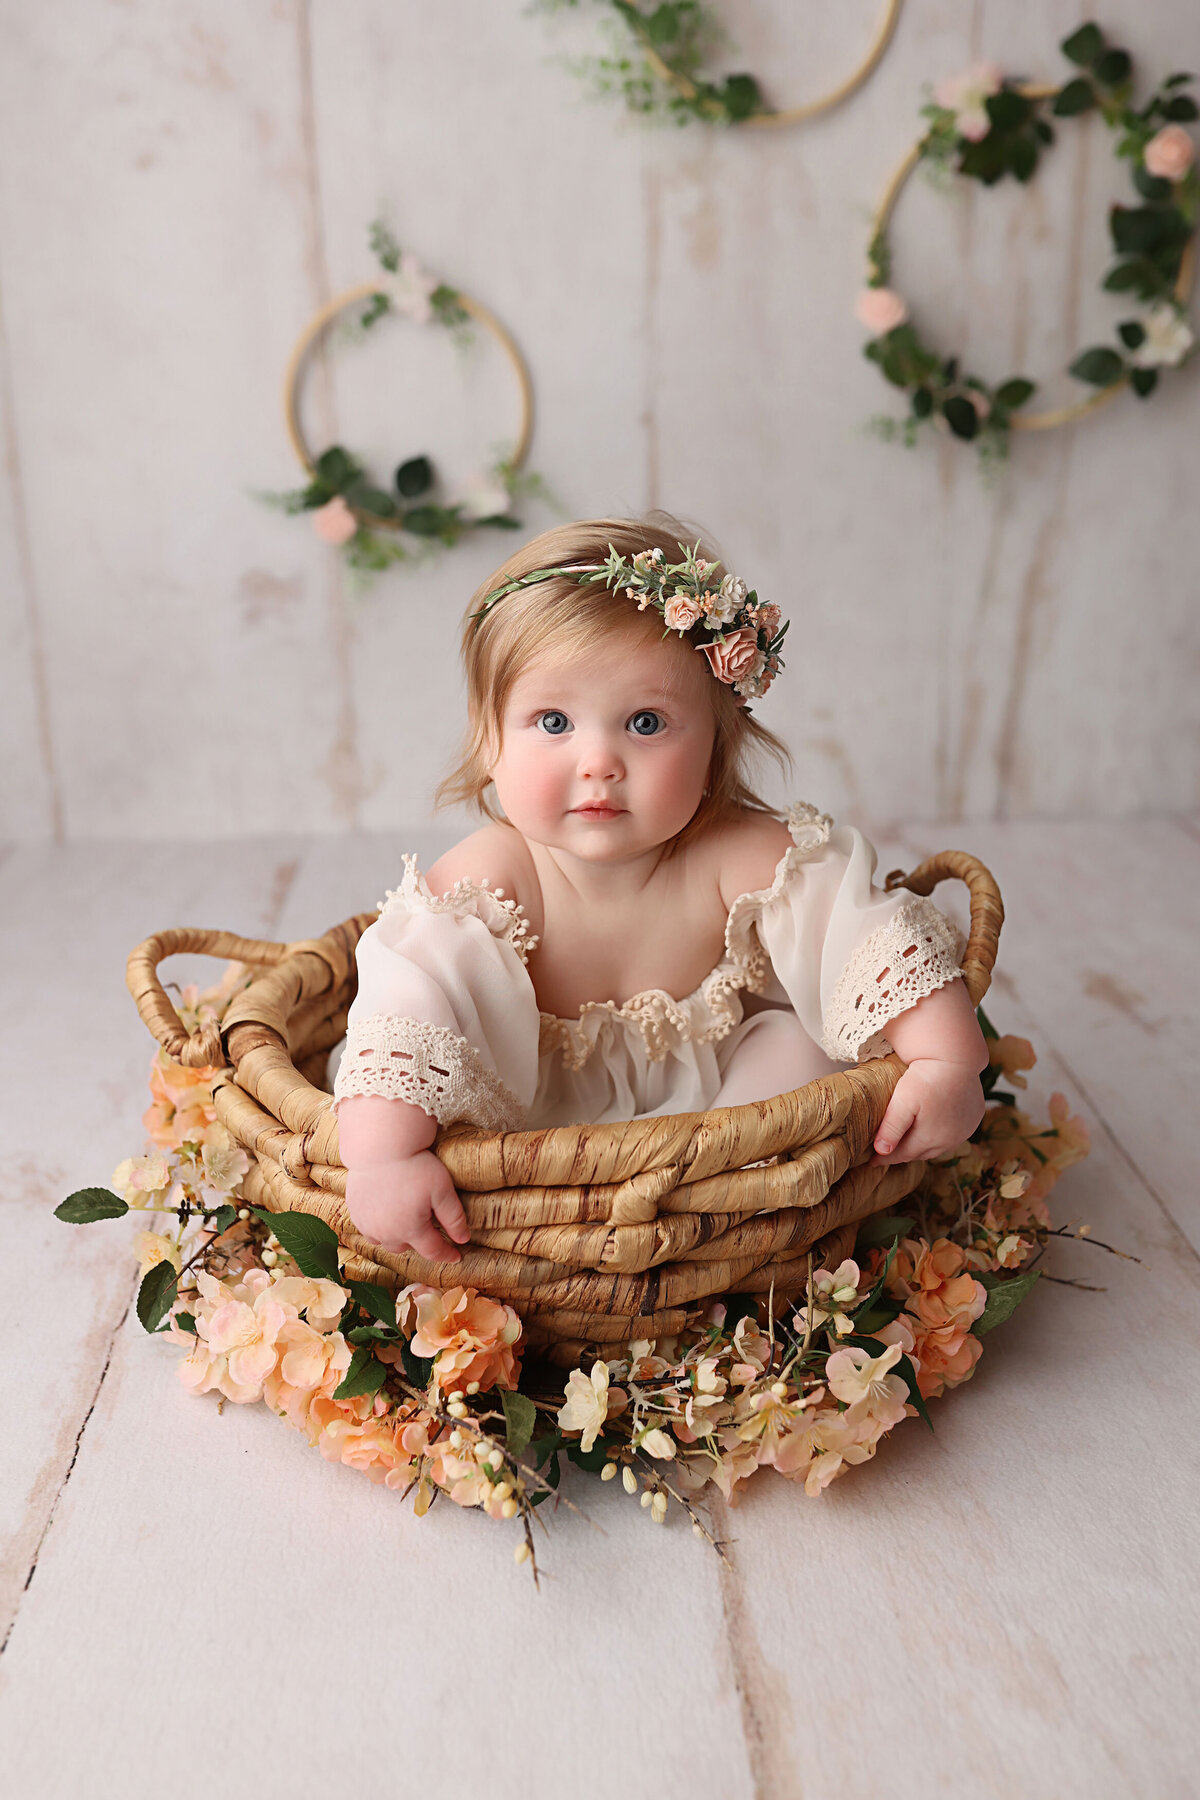 kids portrait showing a little girl siting in a wicker basket with flowers